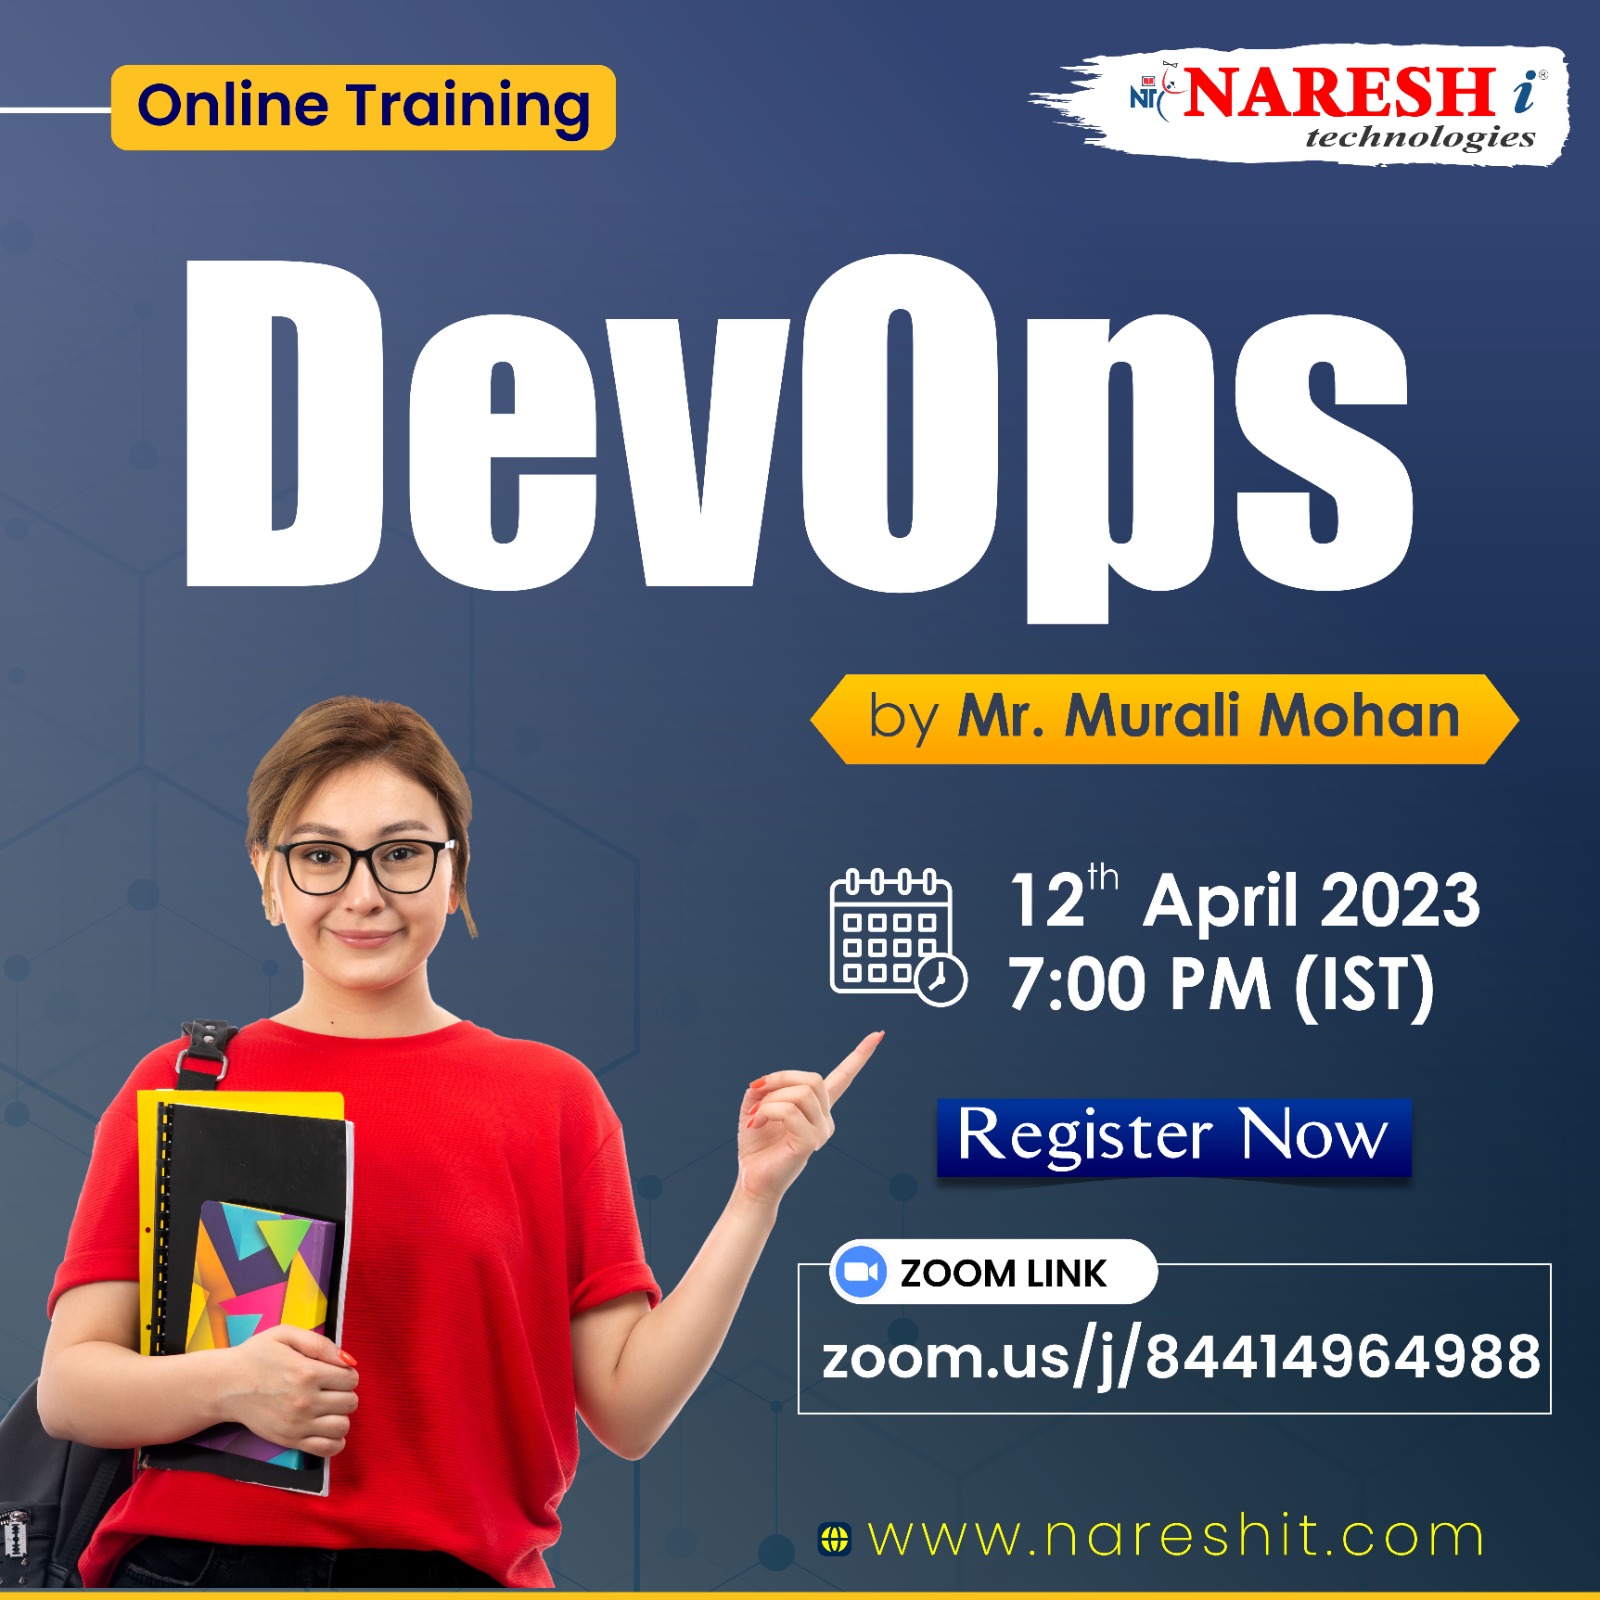 N0.1 Training institute for Devops in india 2023 NareshIT, Online Event